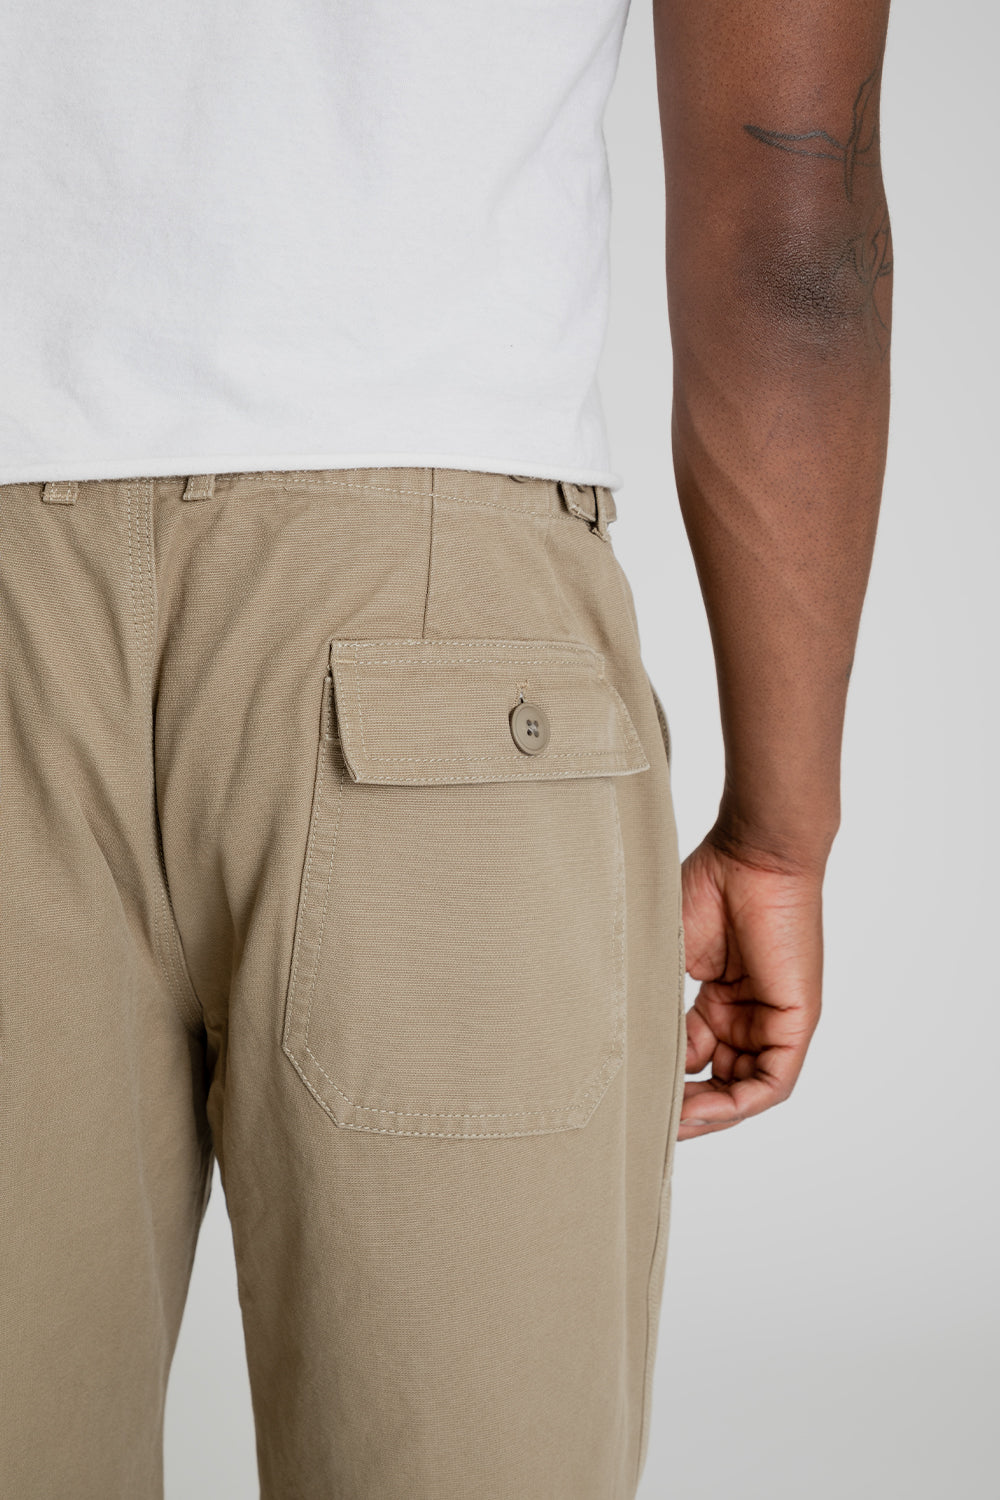 Frizmworks Jungle Cloth Fatigue Pants Khaki Beige Detail 03